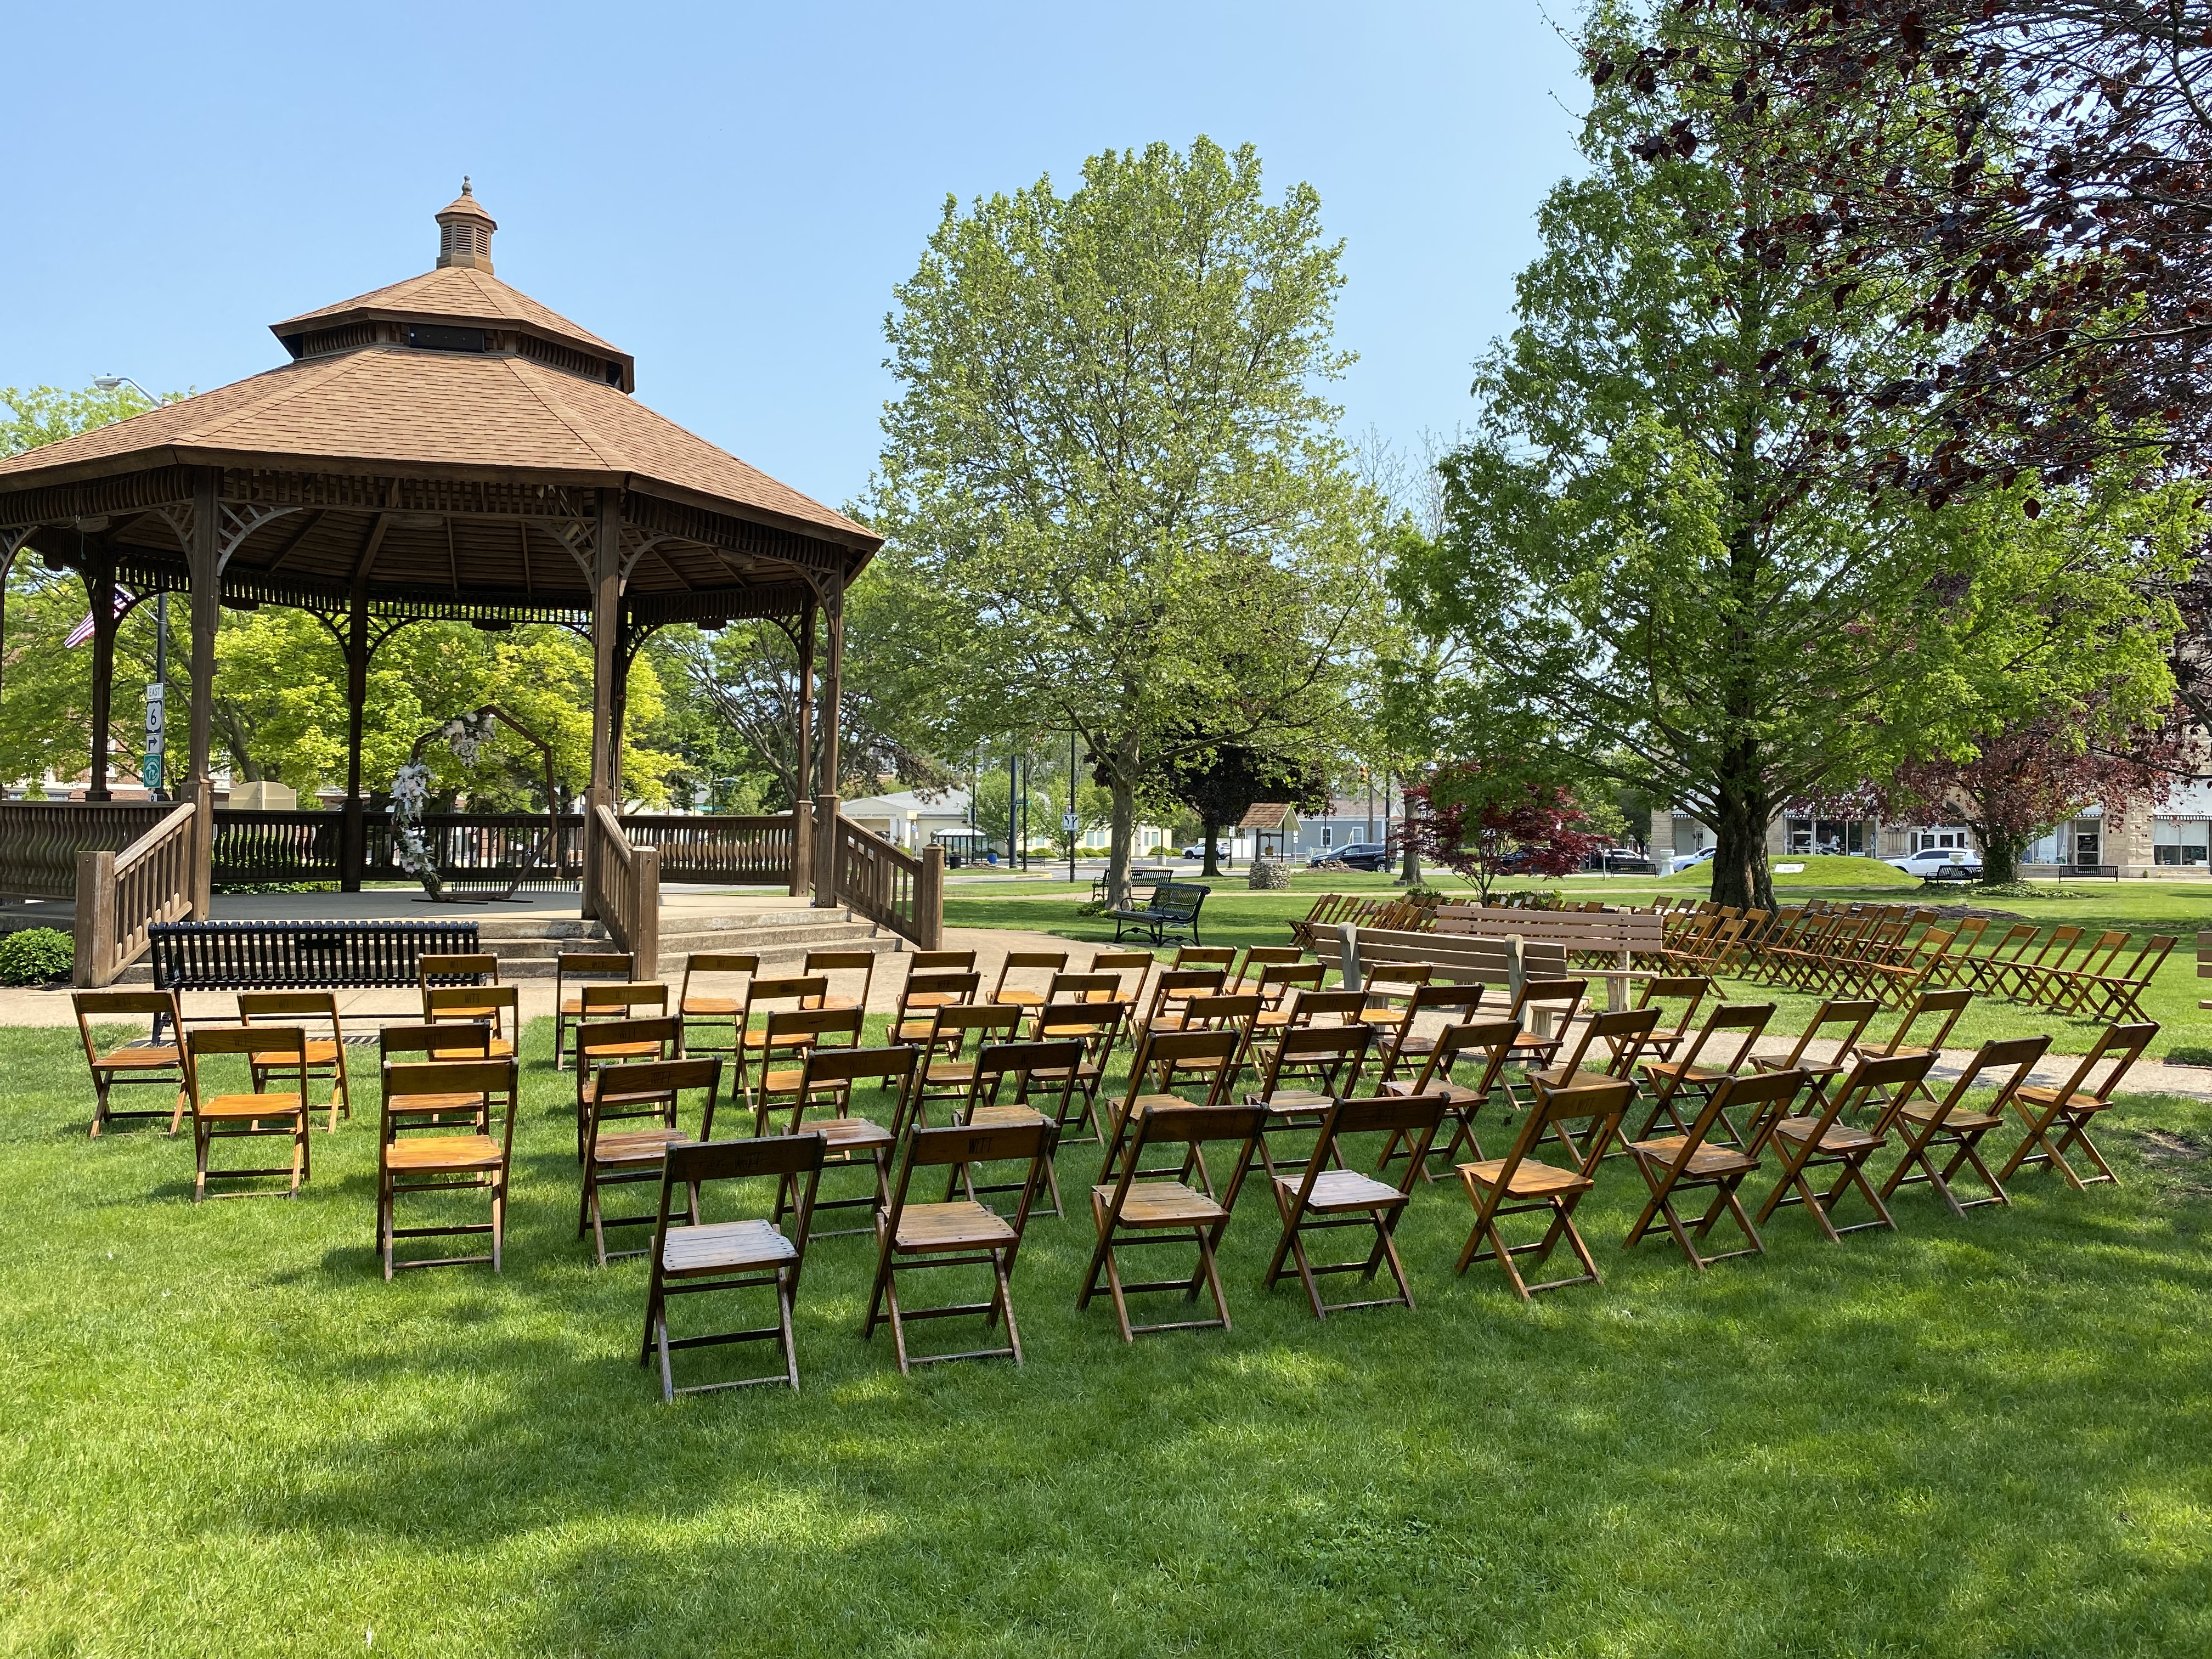 White Padded Resin Chair Wedding